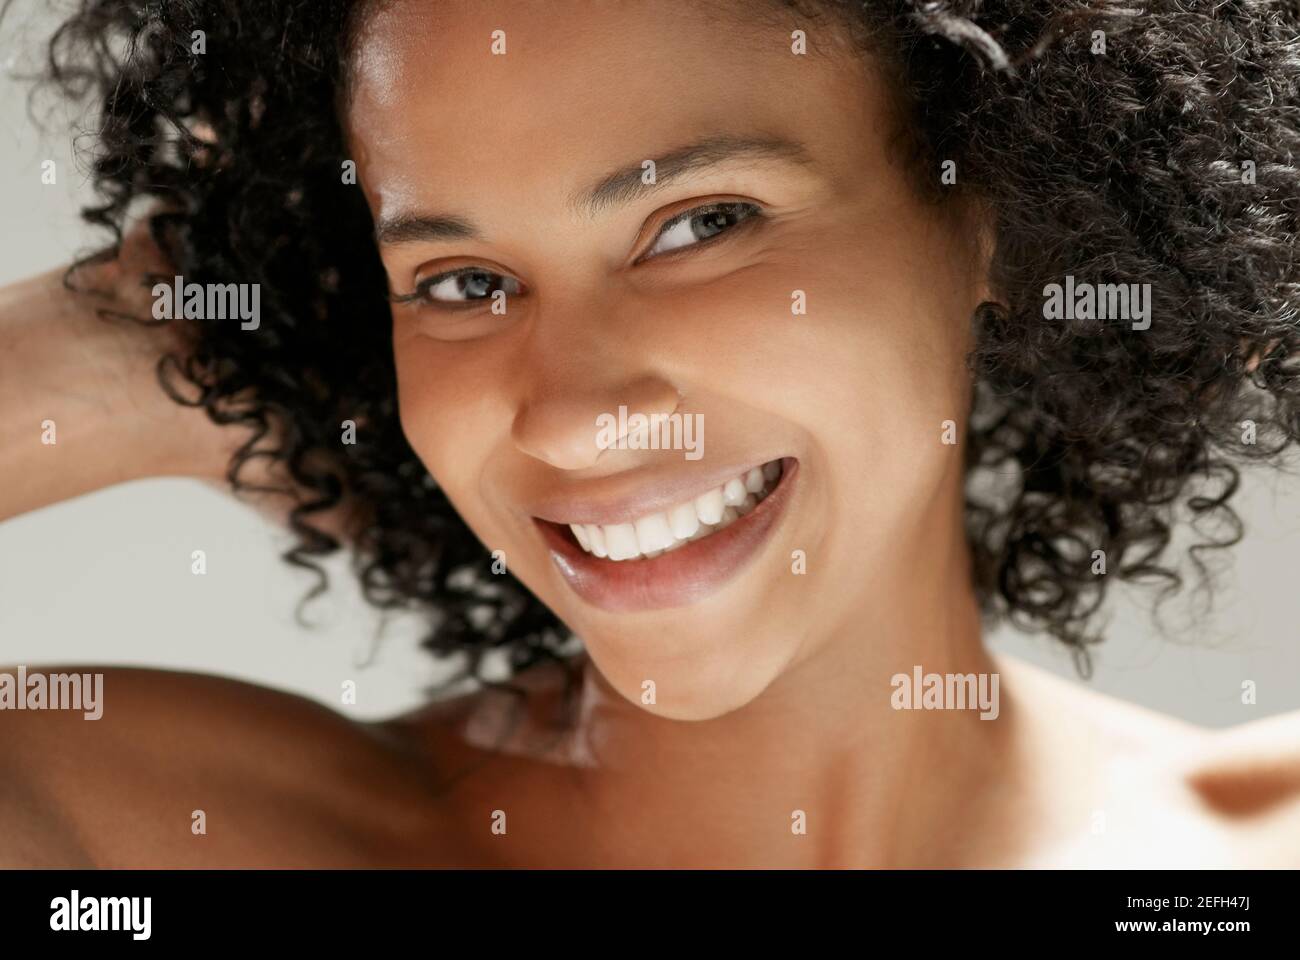 Portrait of a young woman smiling Banque D'Images